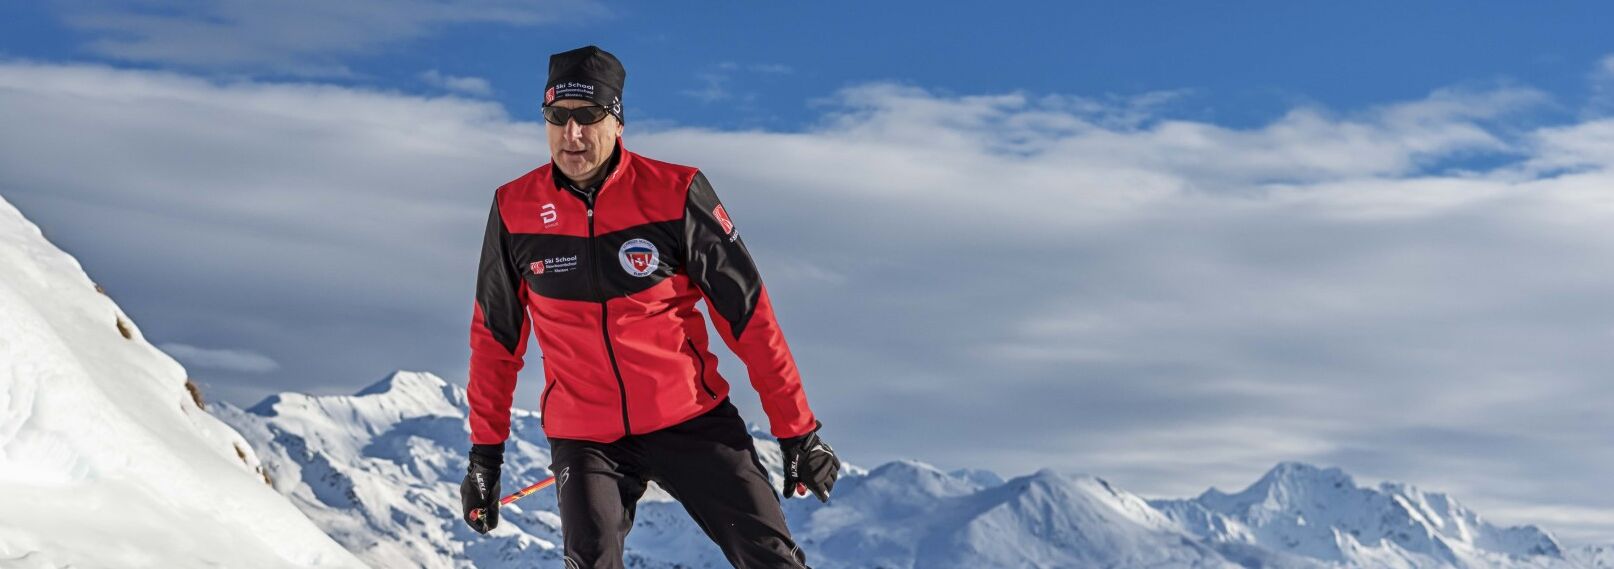 Cross-country ski instructor Klosters Ski School